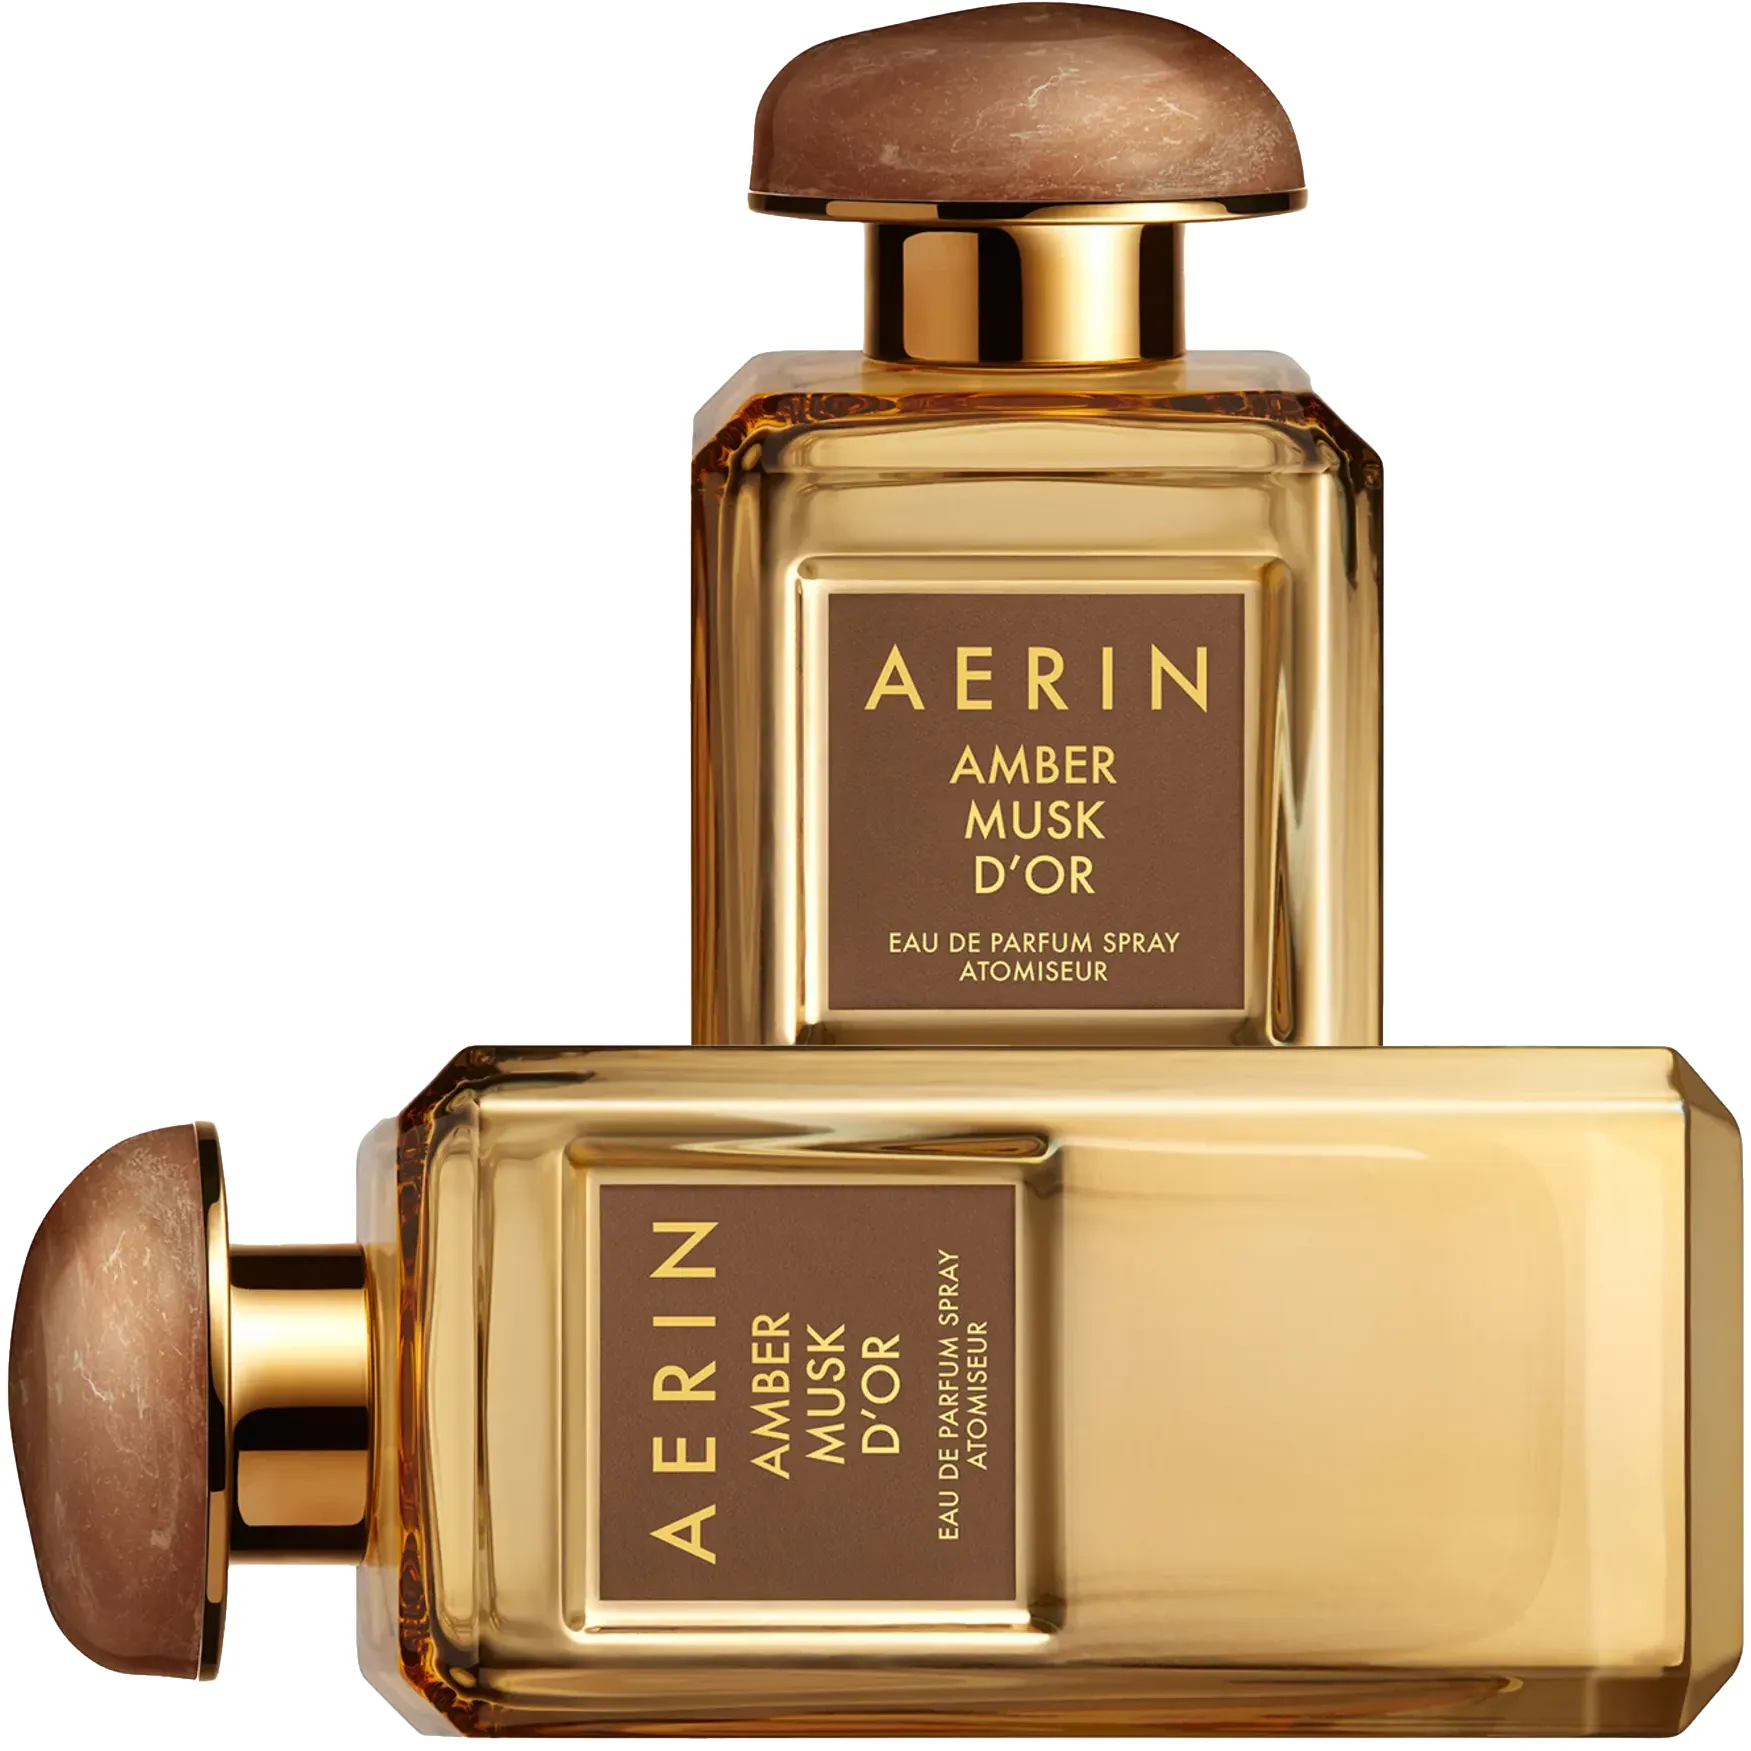 Free Aerin Amber Musk Fragrance